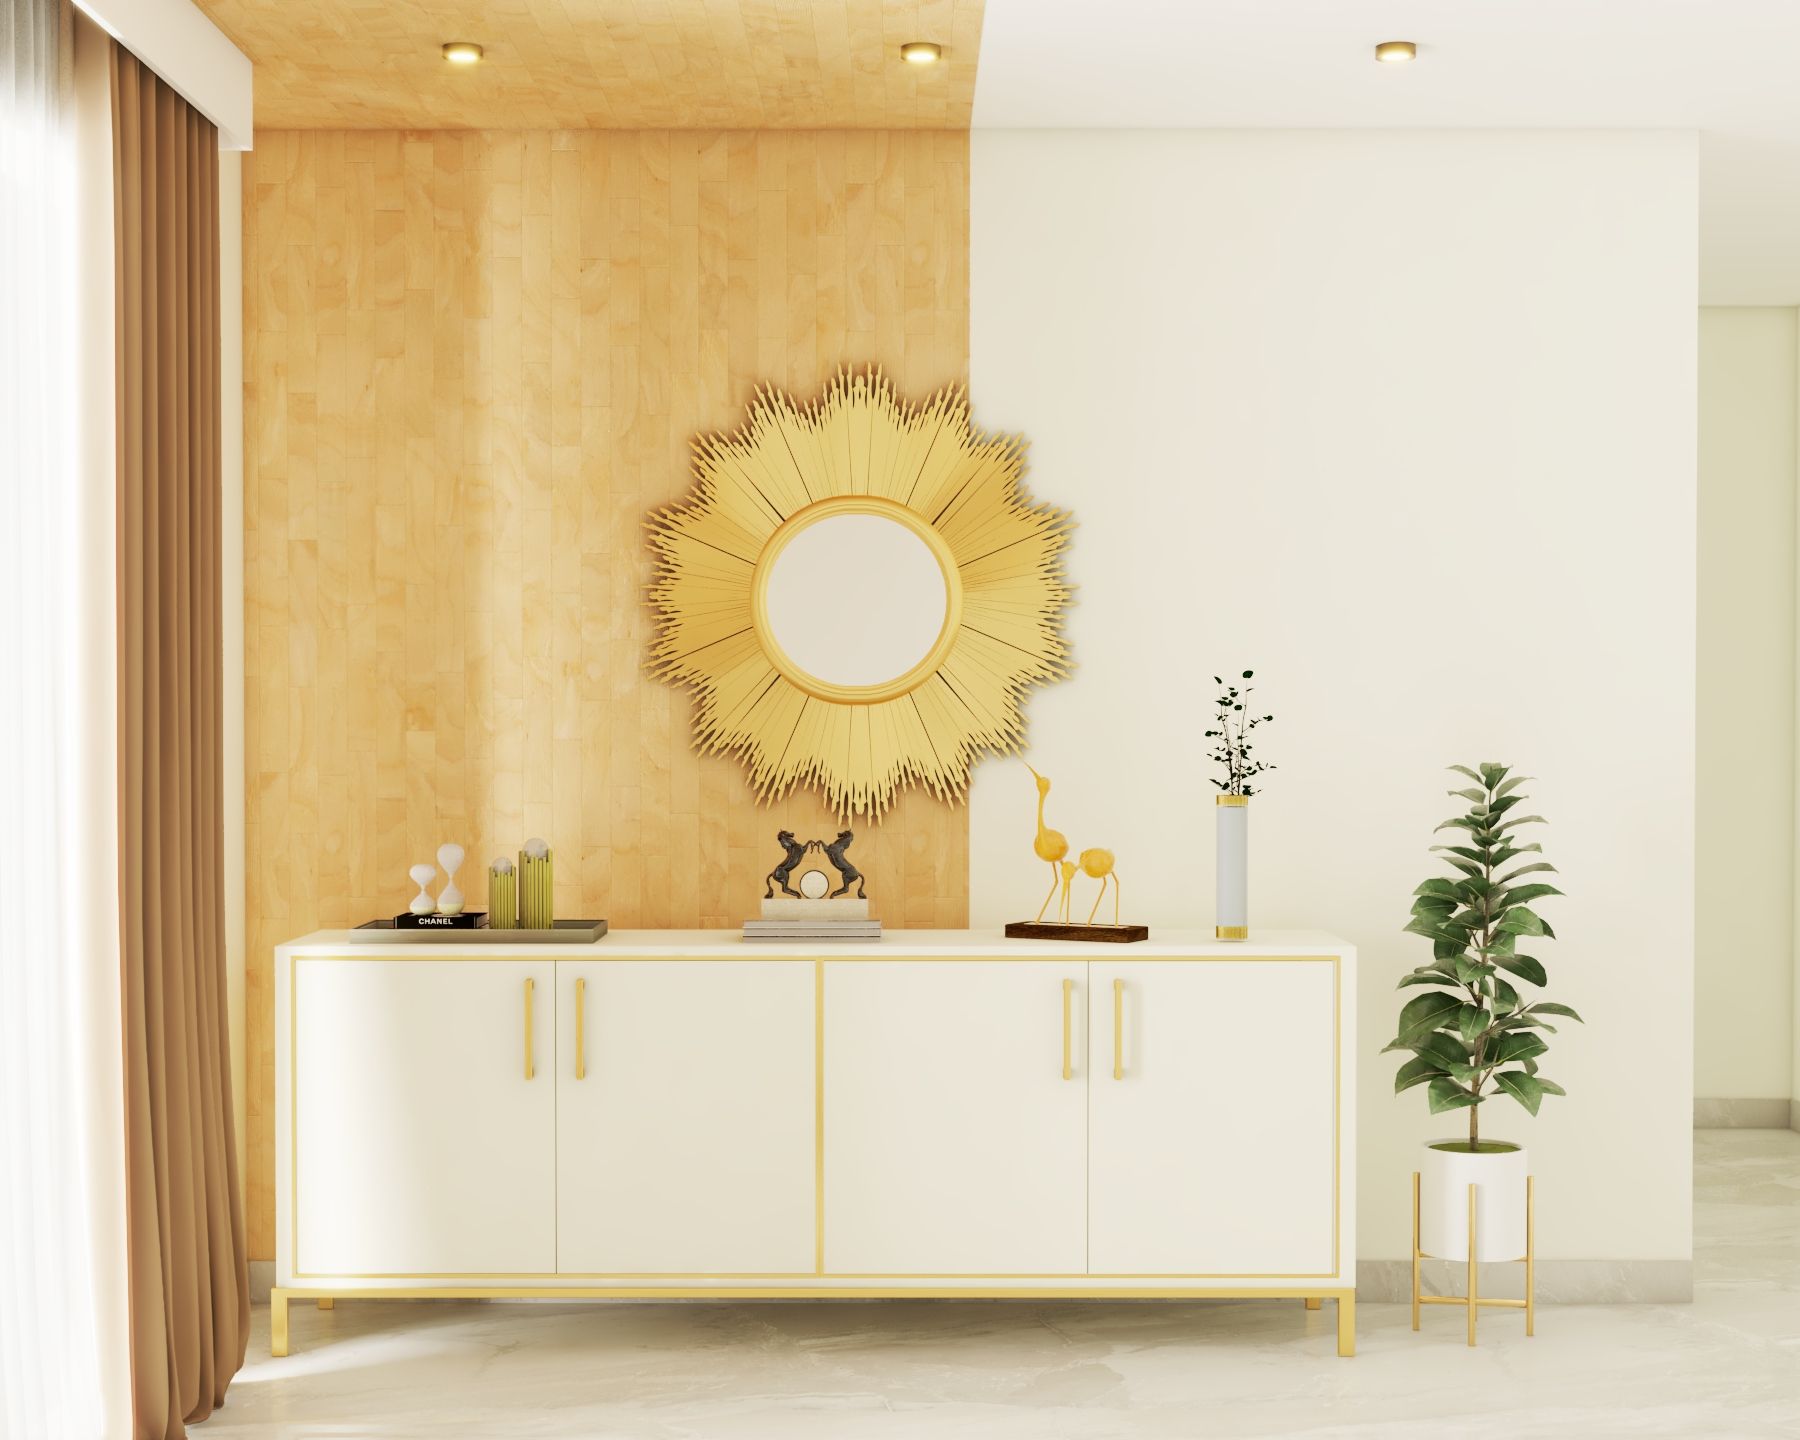 Contemporary Foyer Design With Wooden Grain Wallpaper